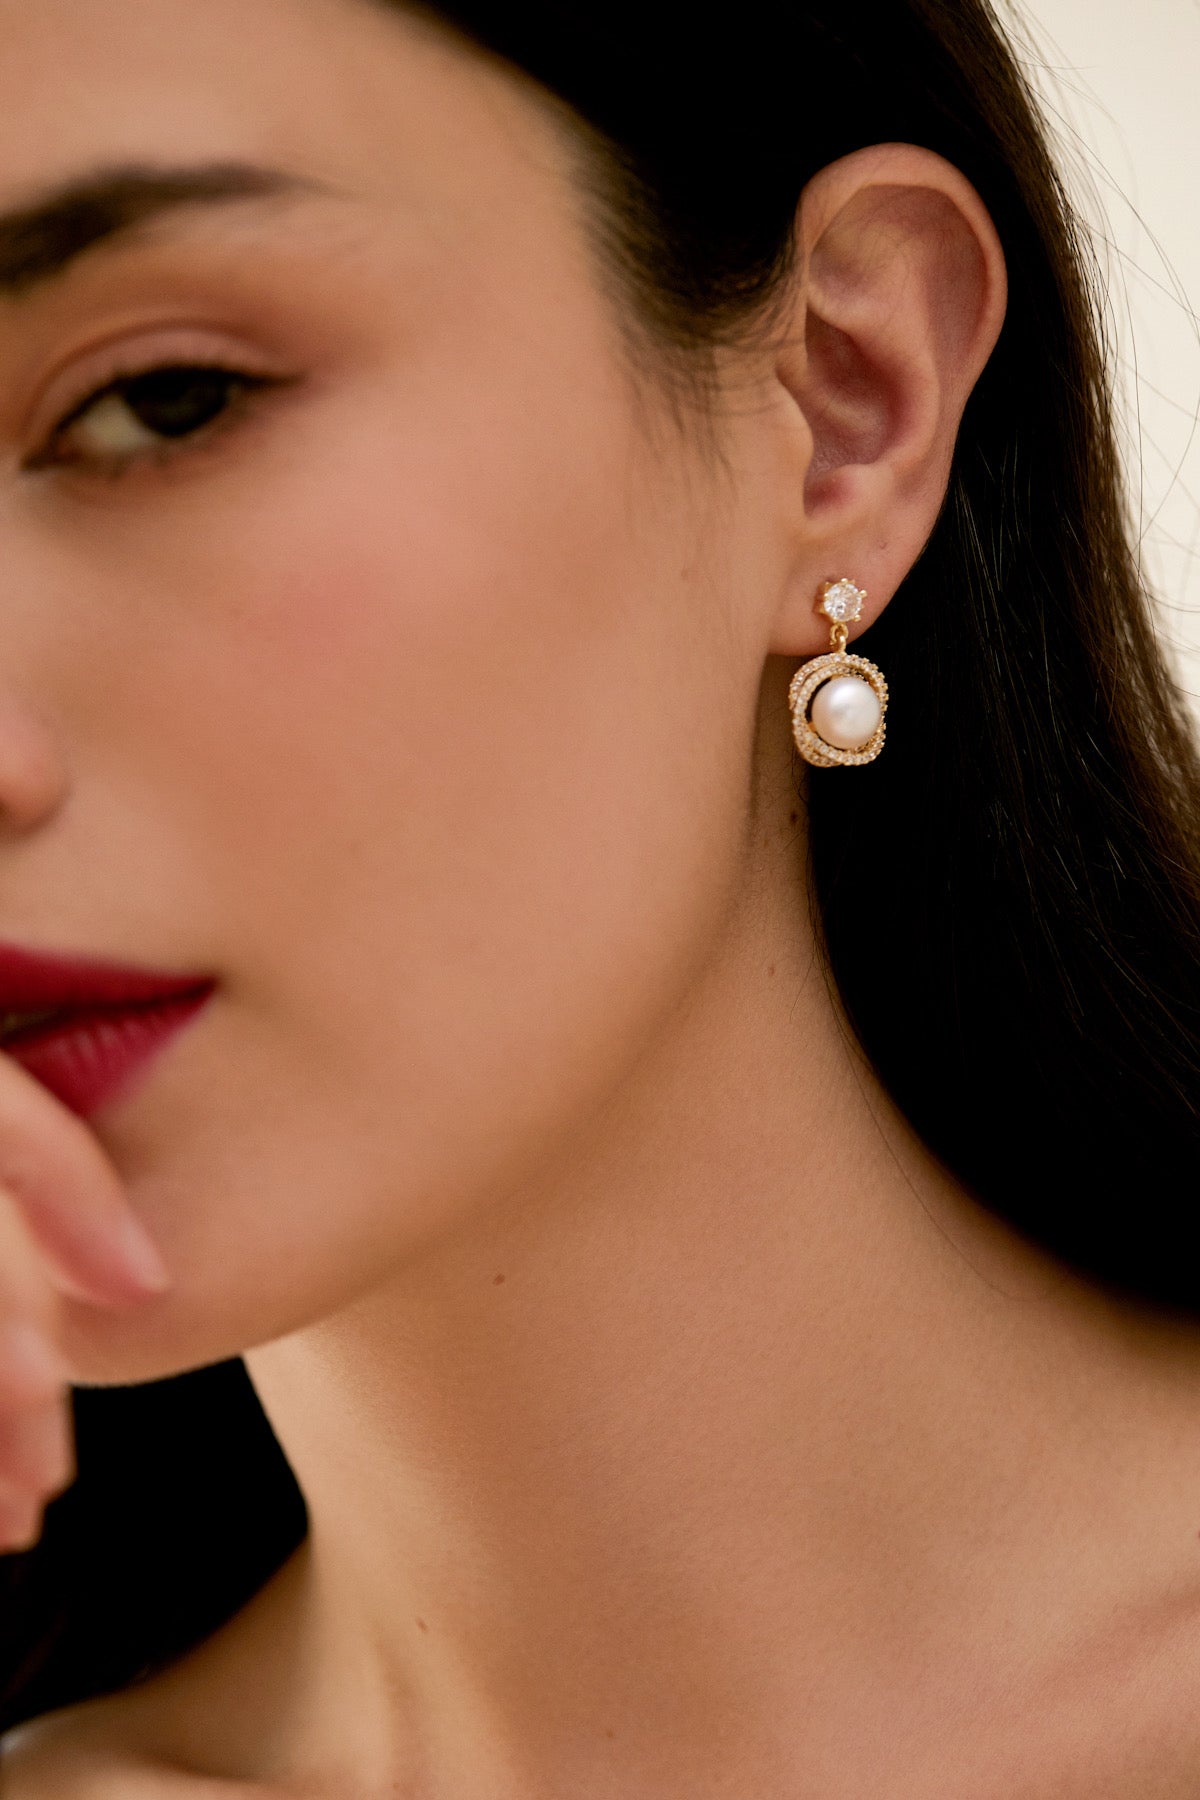 SKYE San Francisco Shop Chic Modern Elegant Classy Women Jewelry French Parisian Minimalist Alexandrine 18K Gold Crystal Pearl Earrings 4